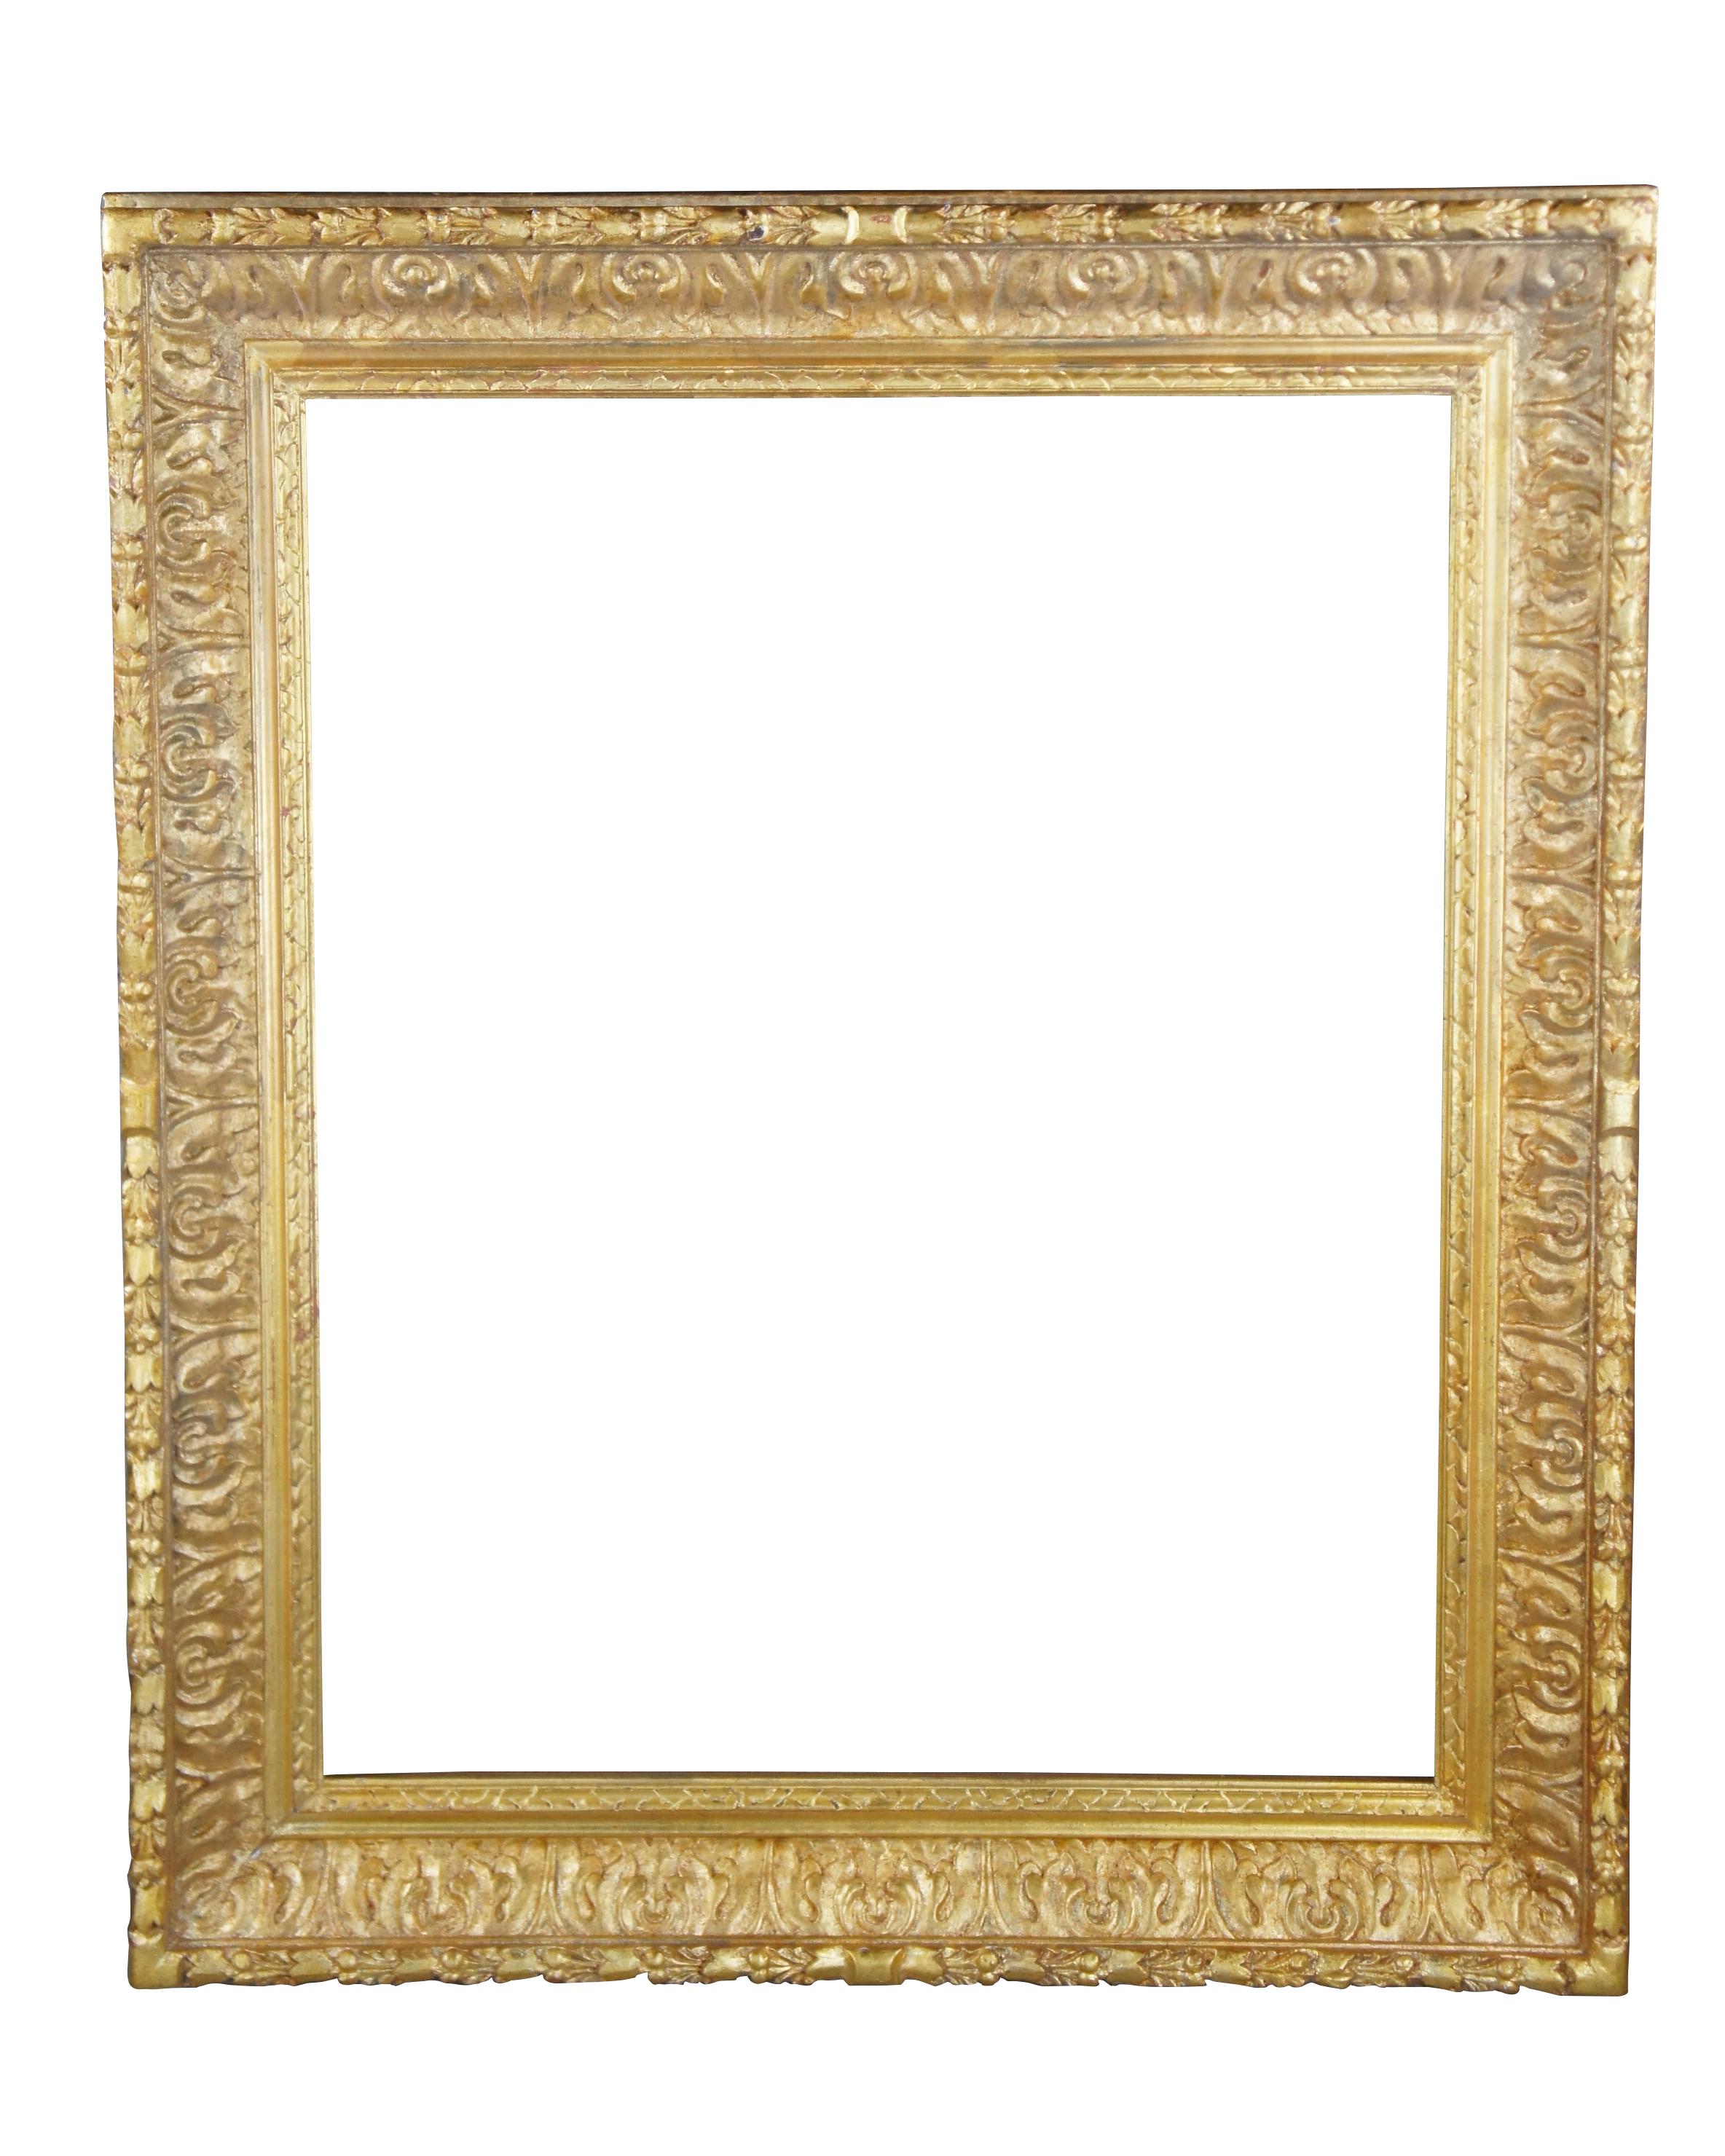 Large Impressive Antique Carved Gold Gilded Picture Art Mirror Frame 53